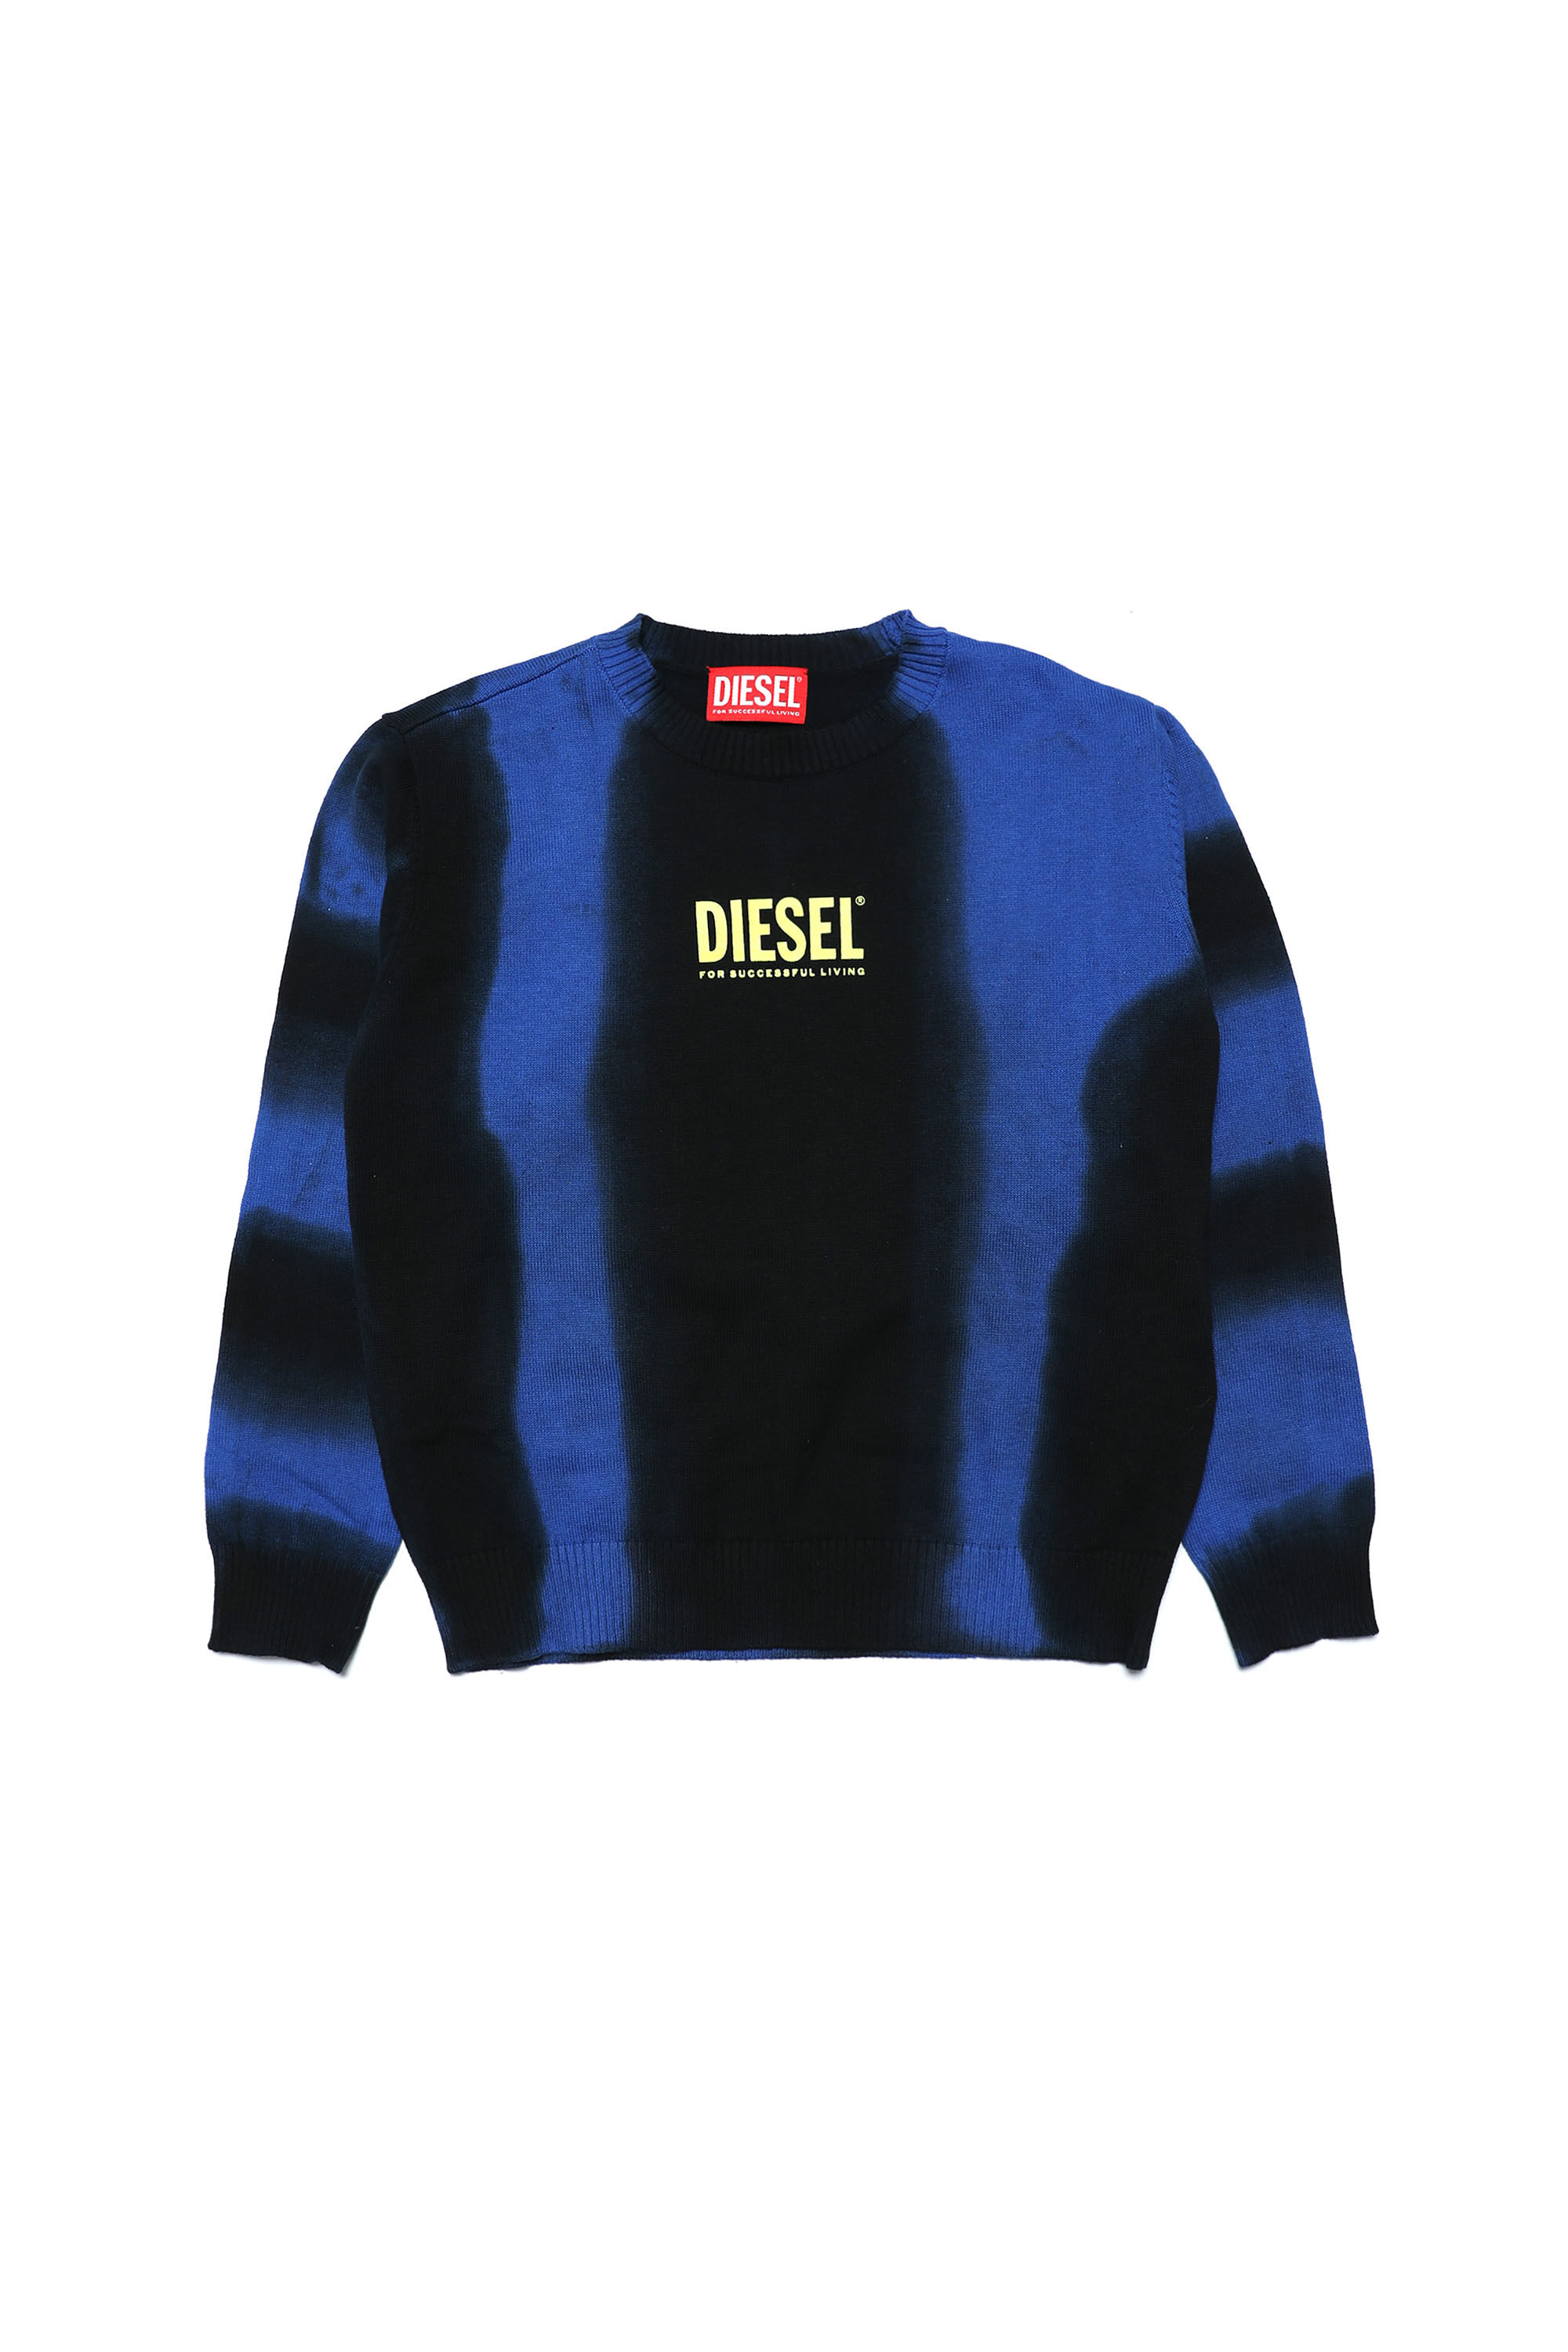 Diesel - KROGER, Blue/Black - Image 1